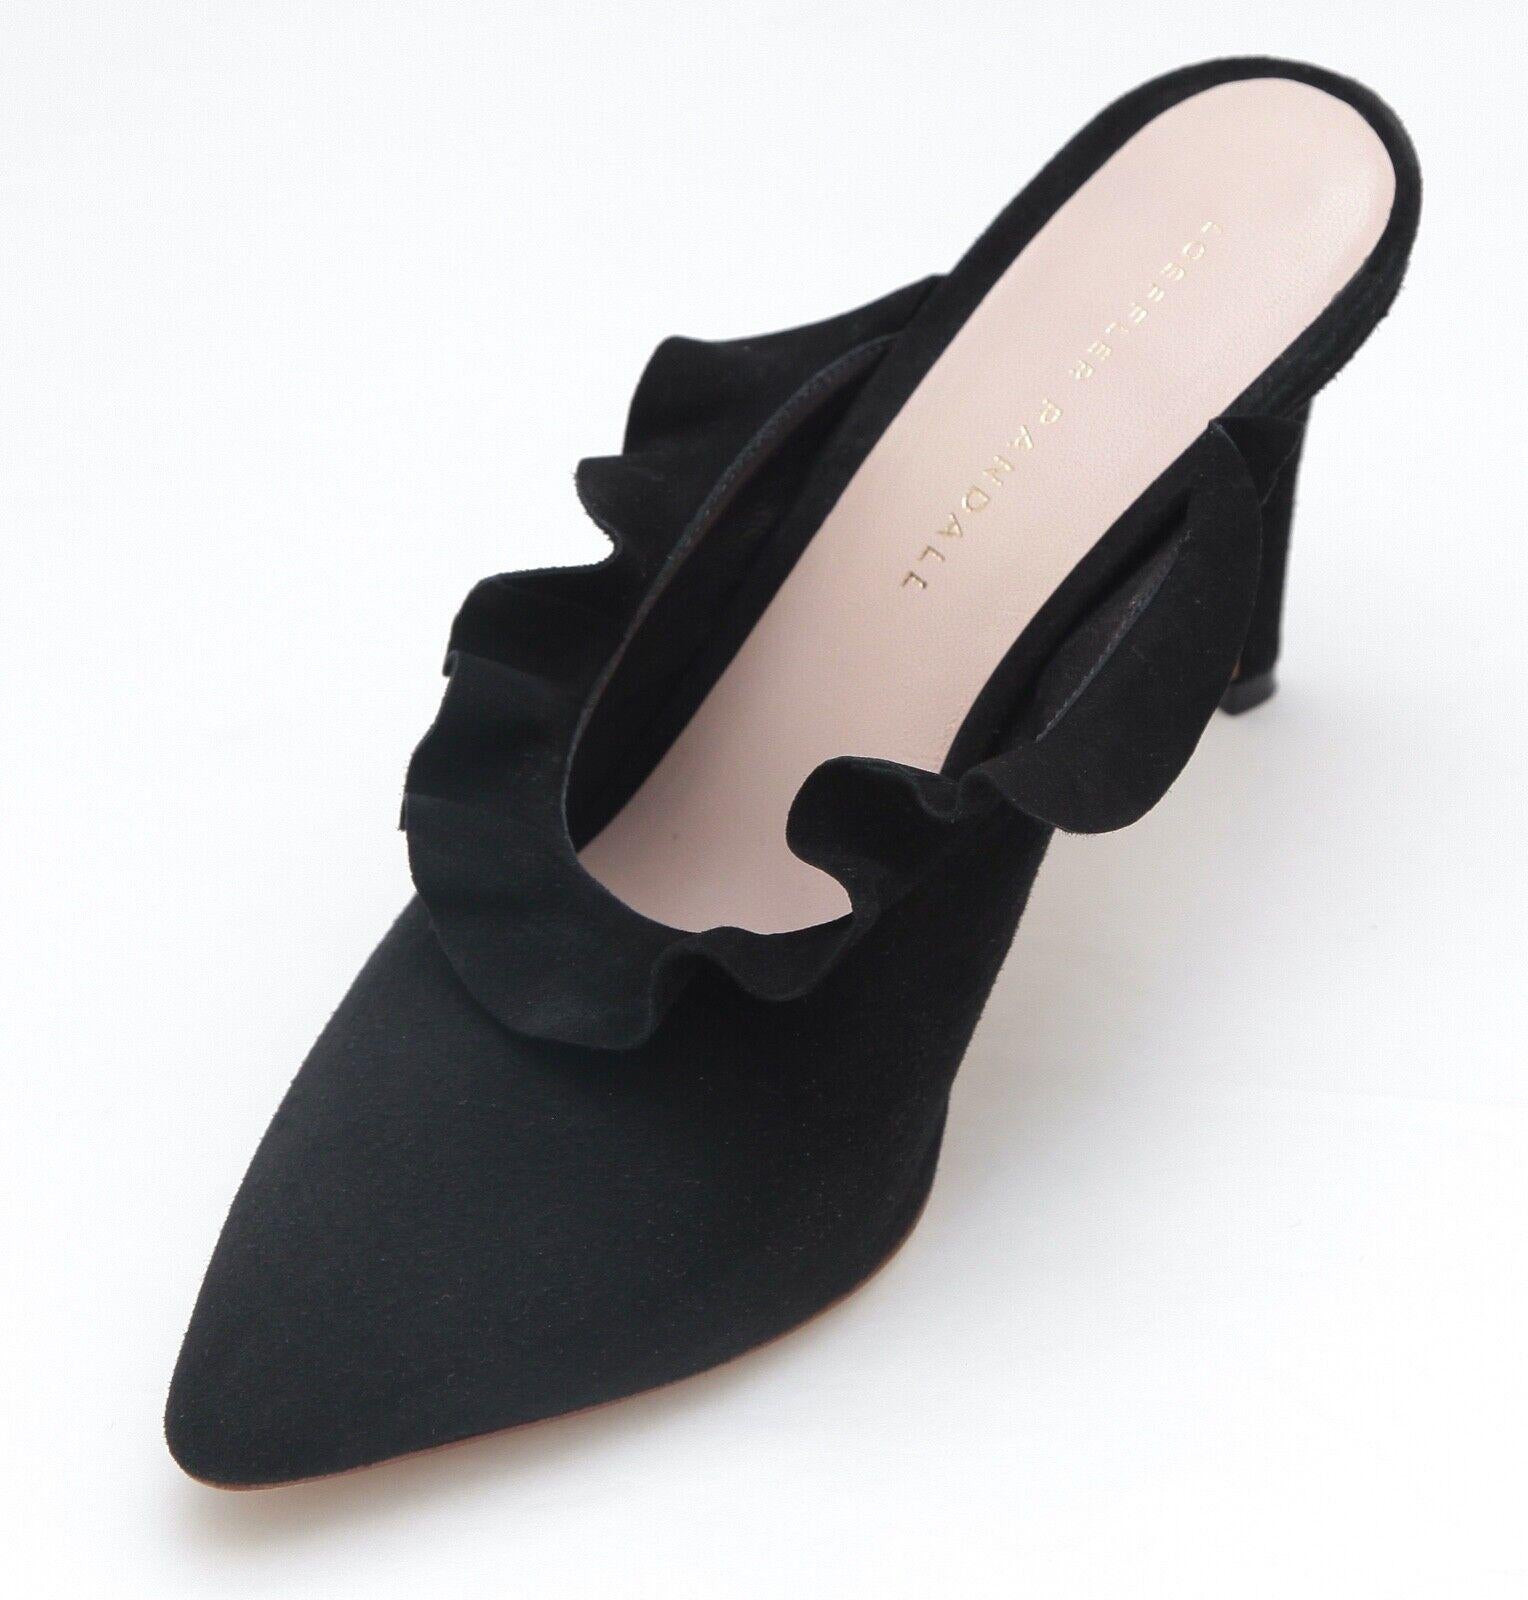 Women's LOEFFLER RANDALL Black Suede Mule Pump Leather Heel Shoe Pointed Toe Ruffle 7.5B